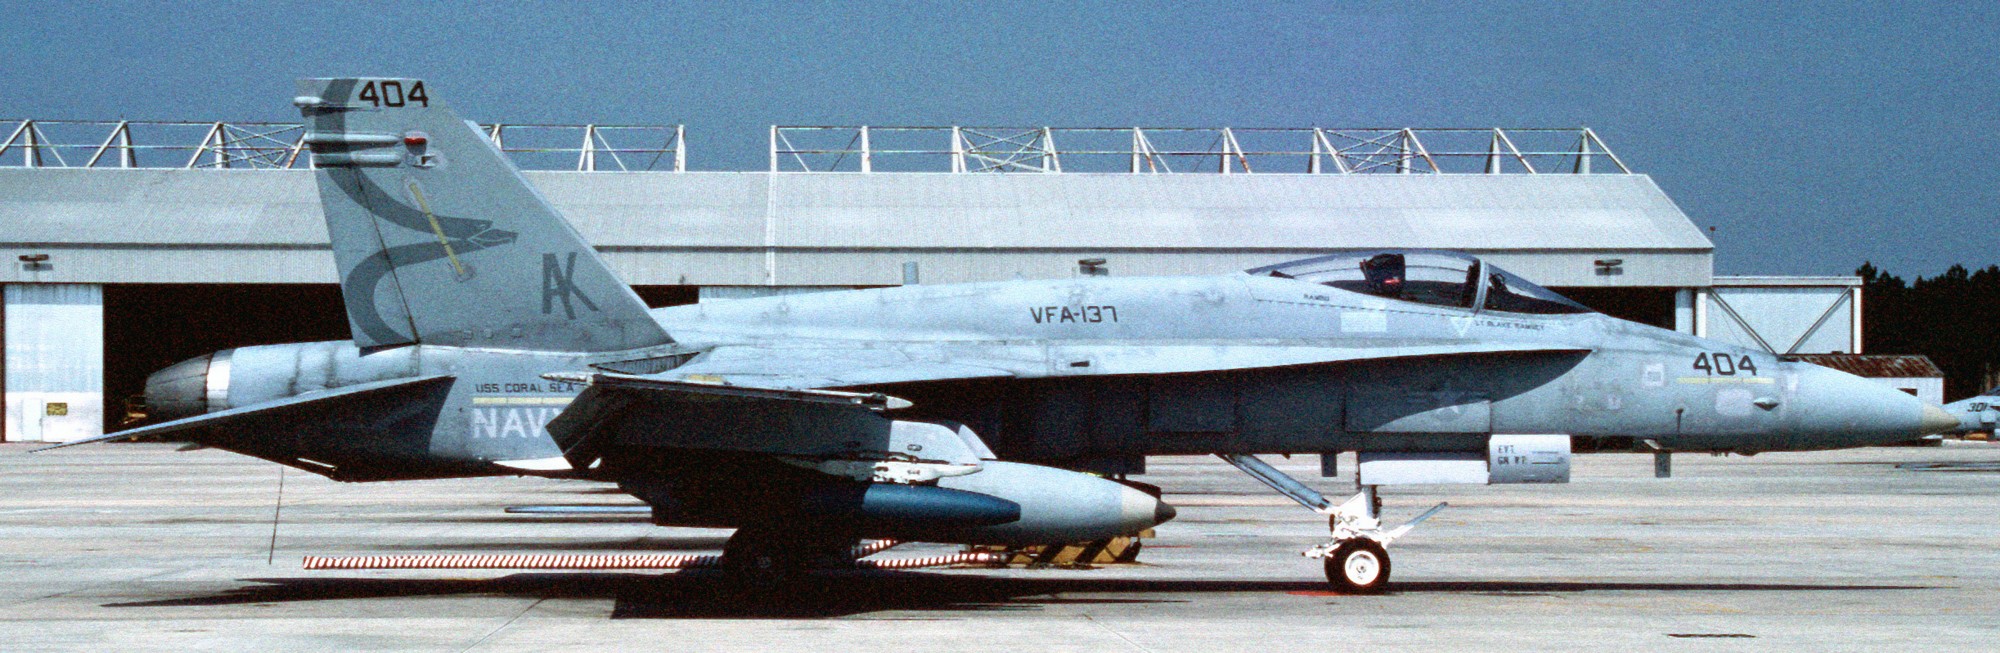 vfa-137 kestrels strike fighter squadron f/a-18a hornet cvw-13 nas fallon nevada 1987 73